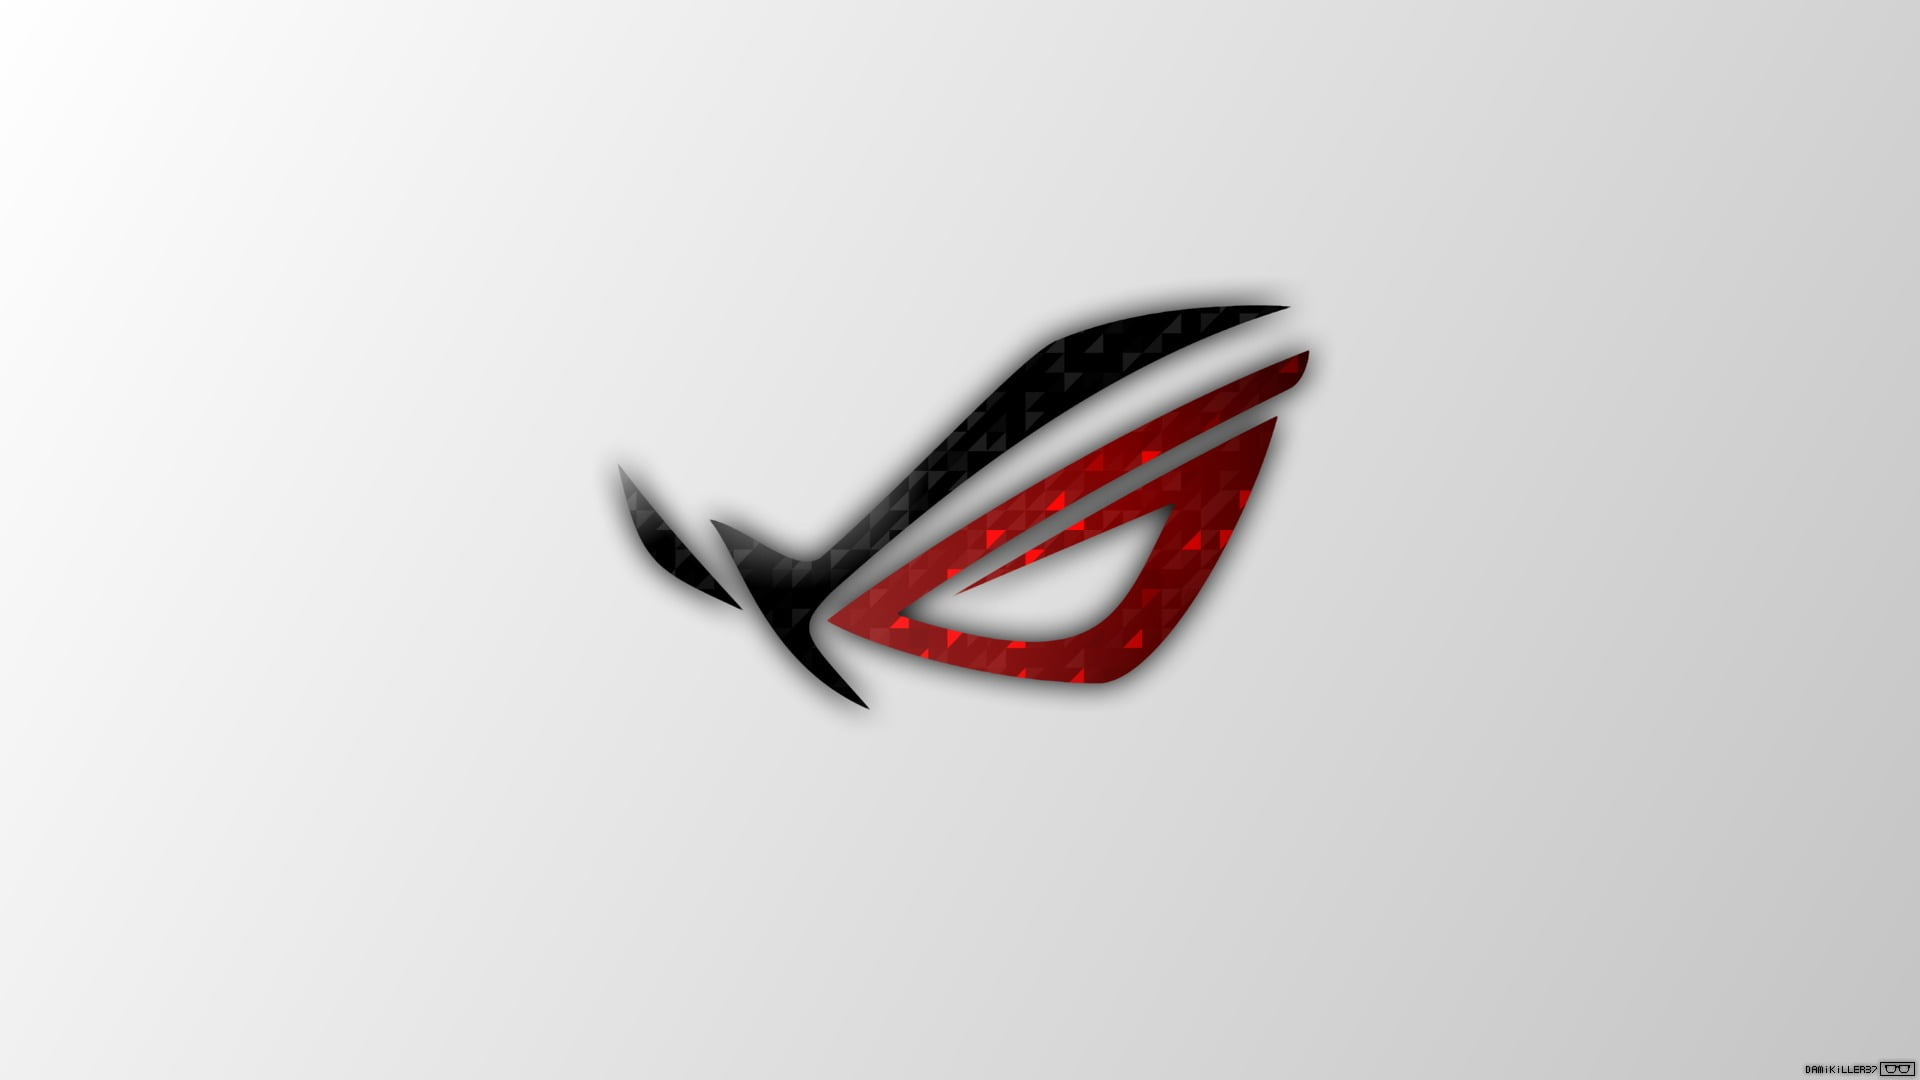 Asus ROG logo, Republic of Gamers, Trixel, white background, studio shot